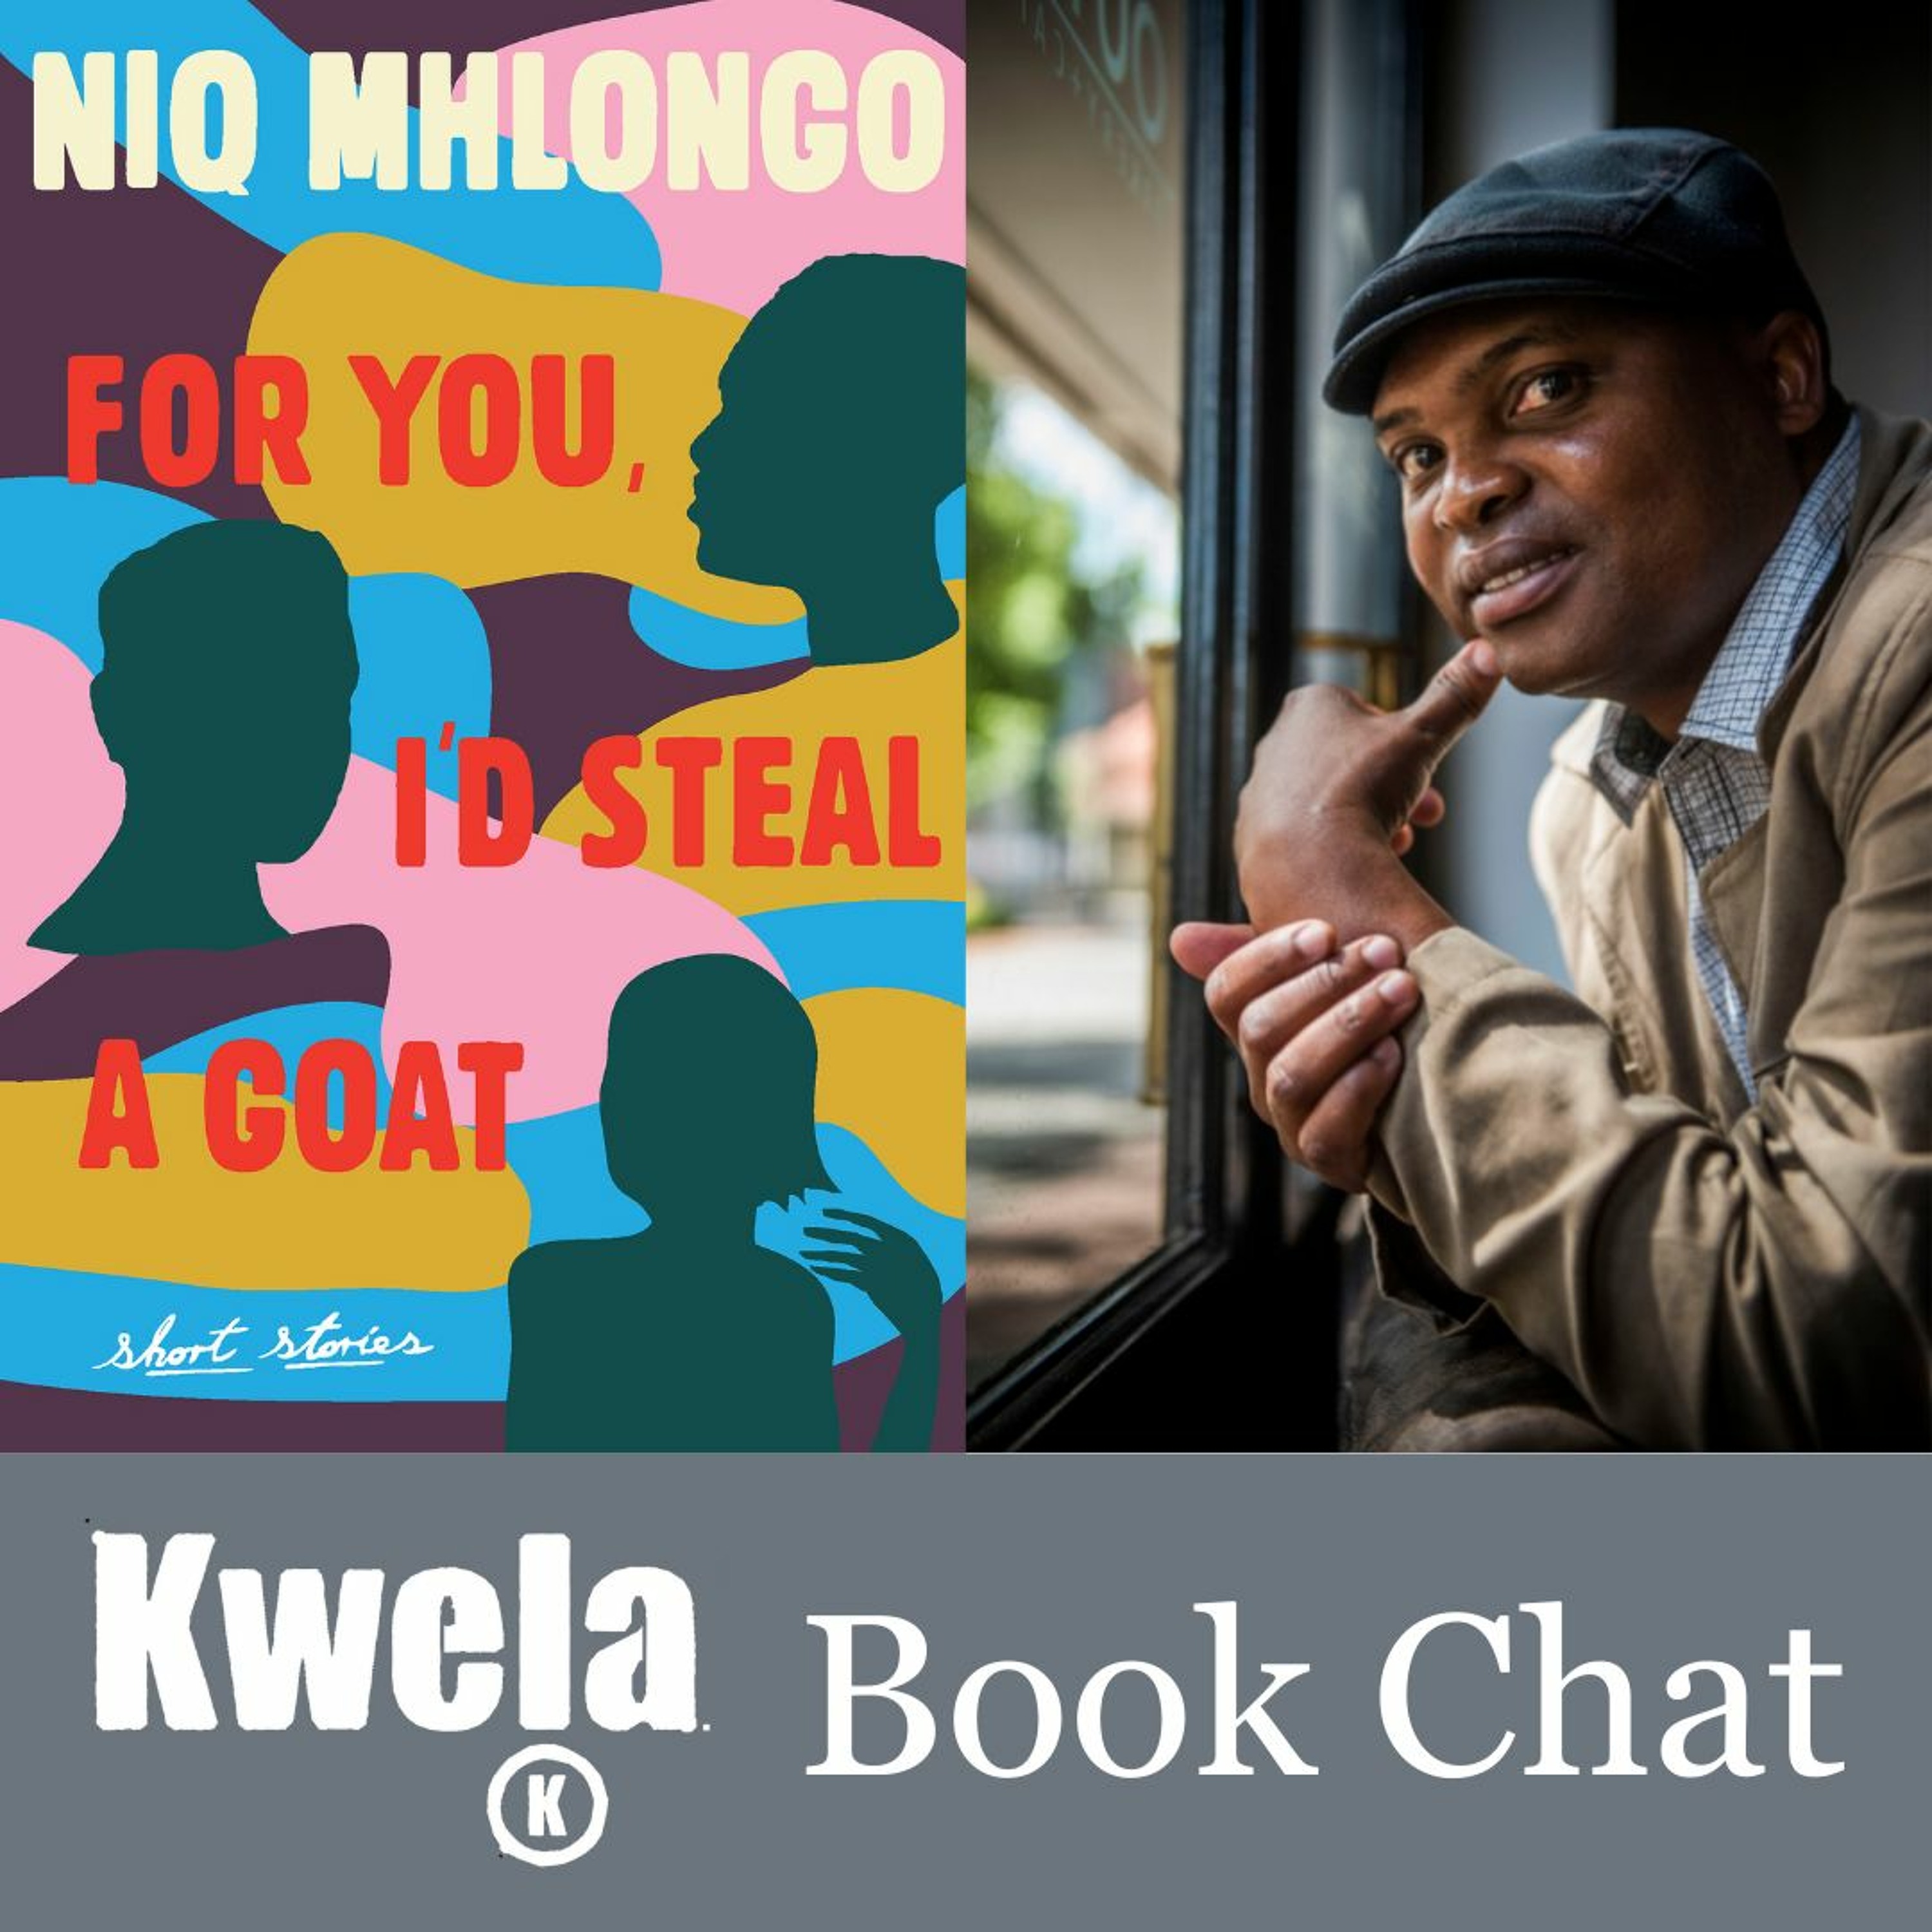 Kwela Book Chat: For You, I'd Steal a Goat by Niq Mhlongo with Sara-Jayne Makwala King